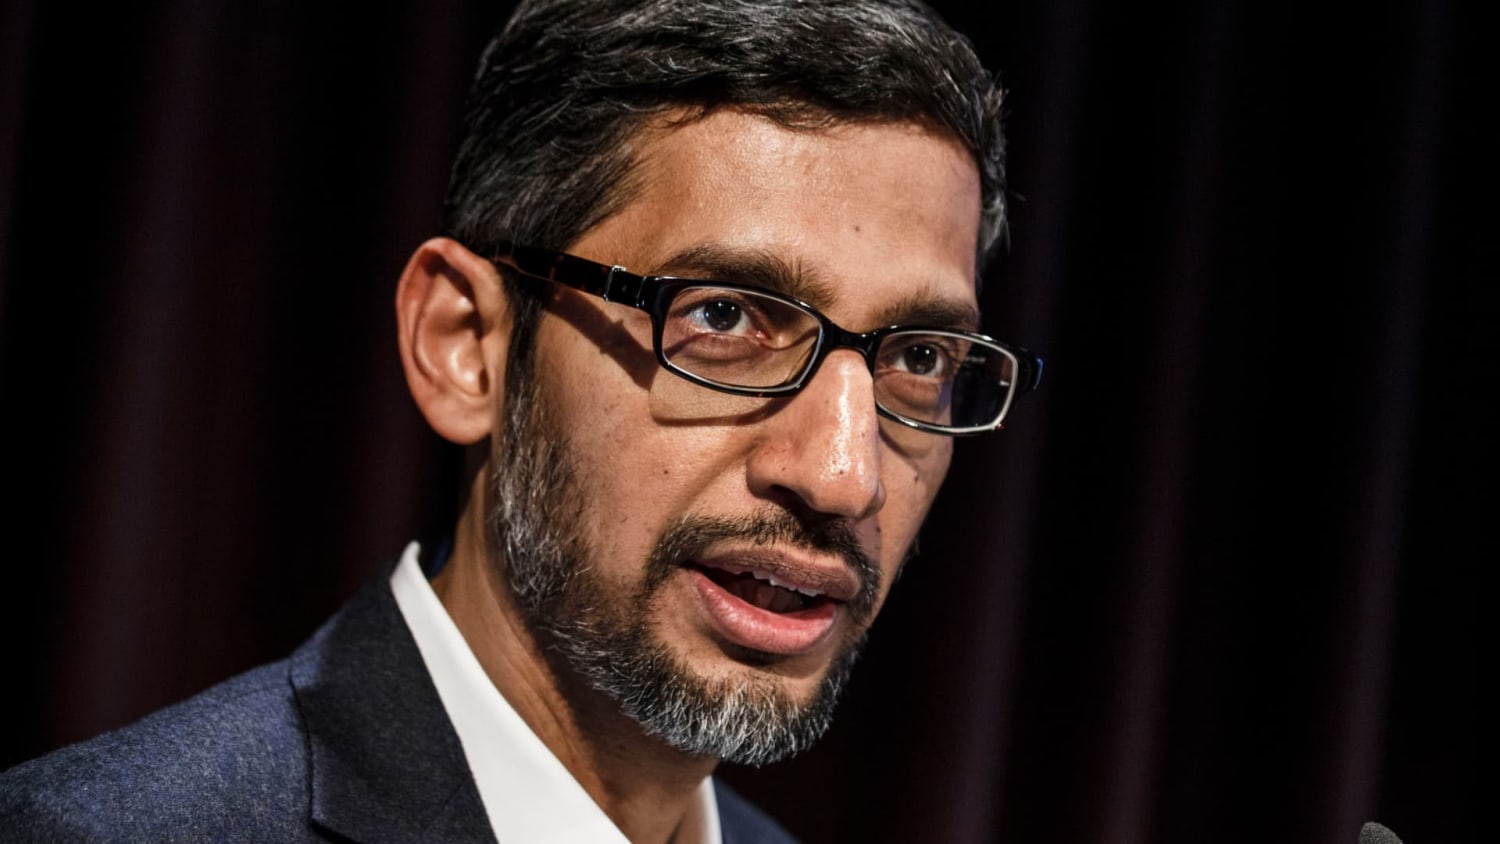 Google cancels A.I. ethics panel after uproar